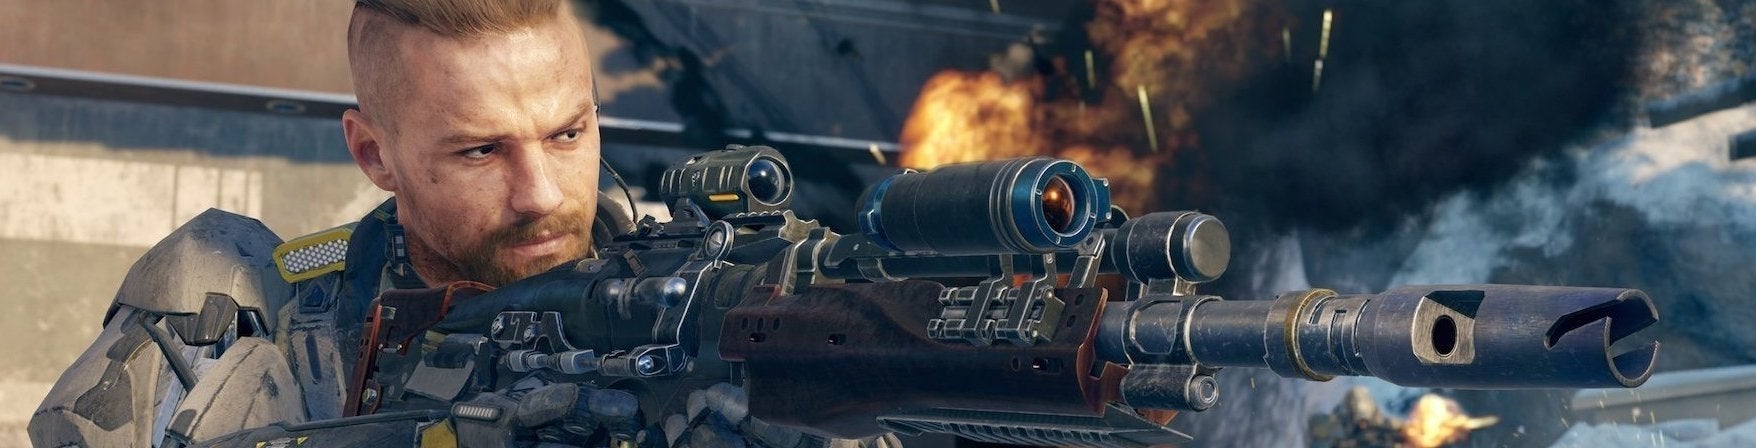 Obrazki dla Digital Foundry kontra Call of Duty: Black Ops 3